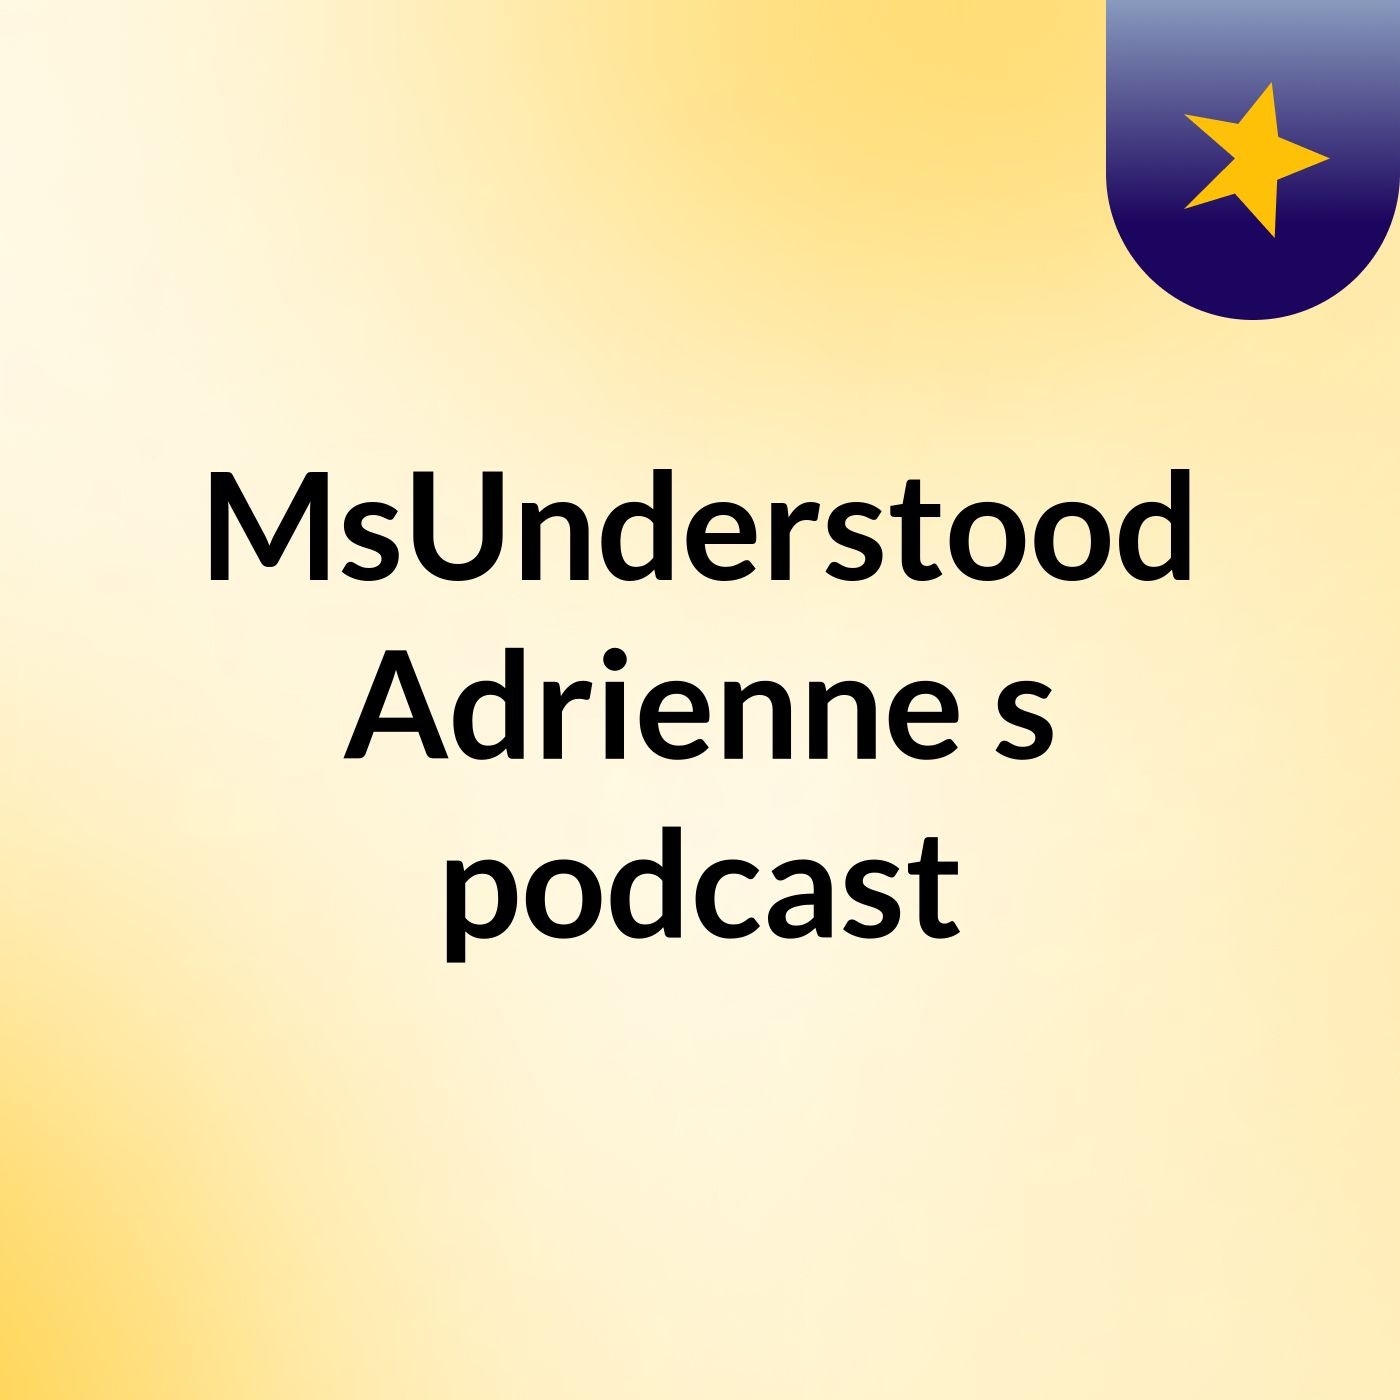 Episode 2 - MsUnderstood Adrienne's podcast